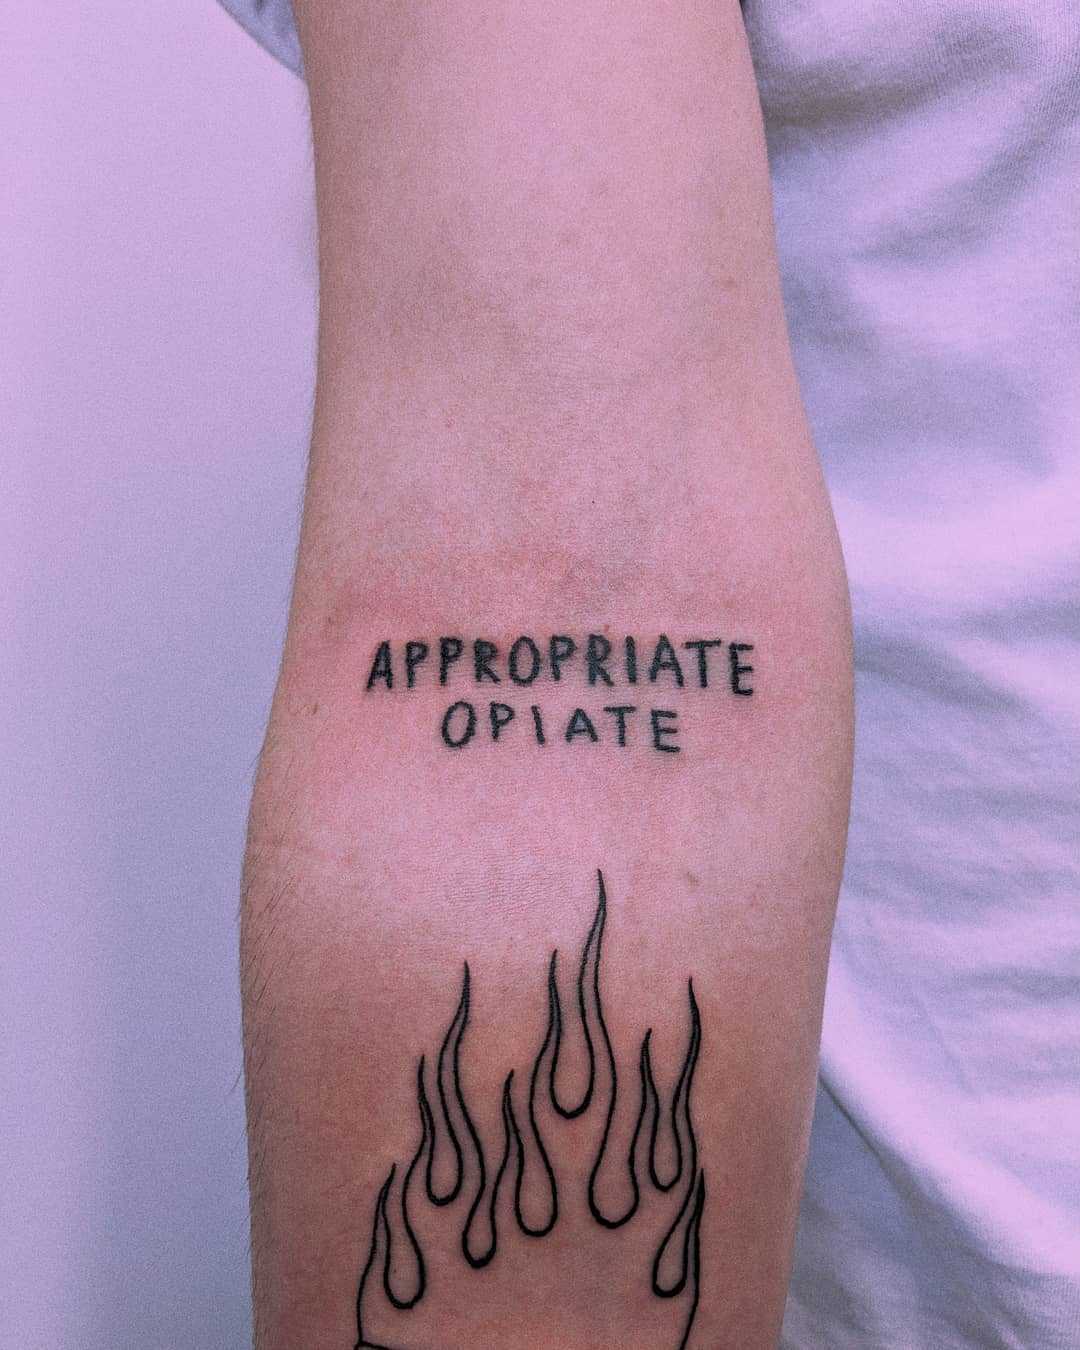 Appropriate opiate tattoo by Tristan Ritter